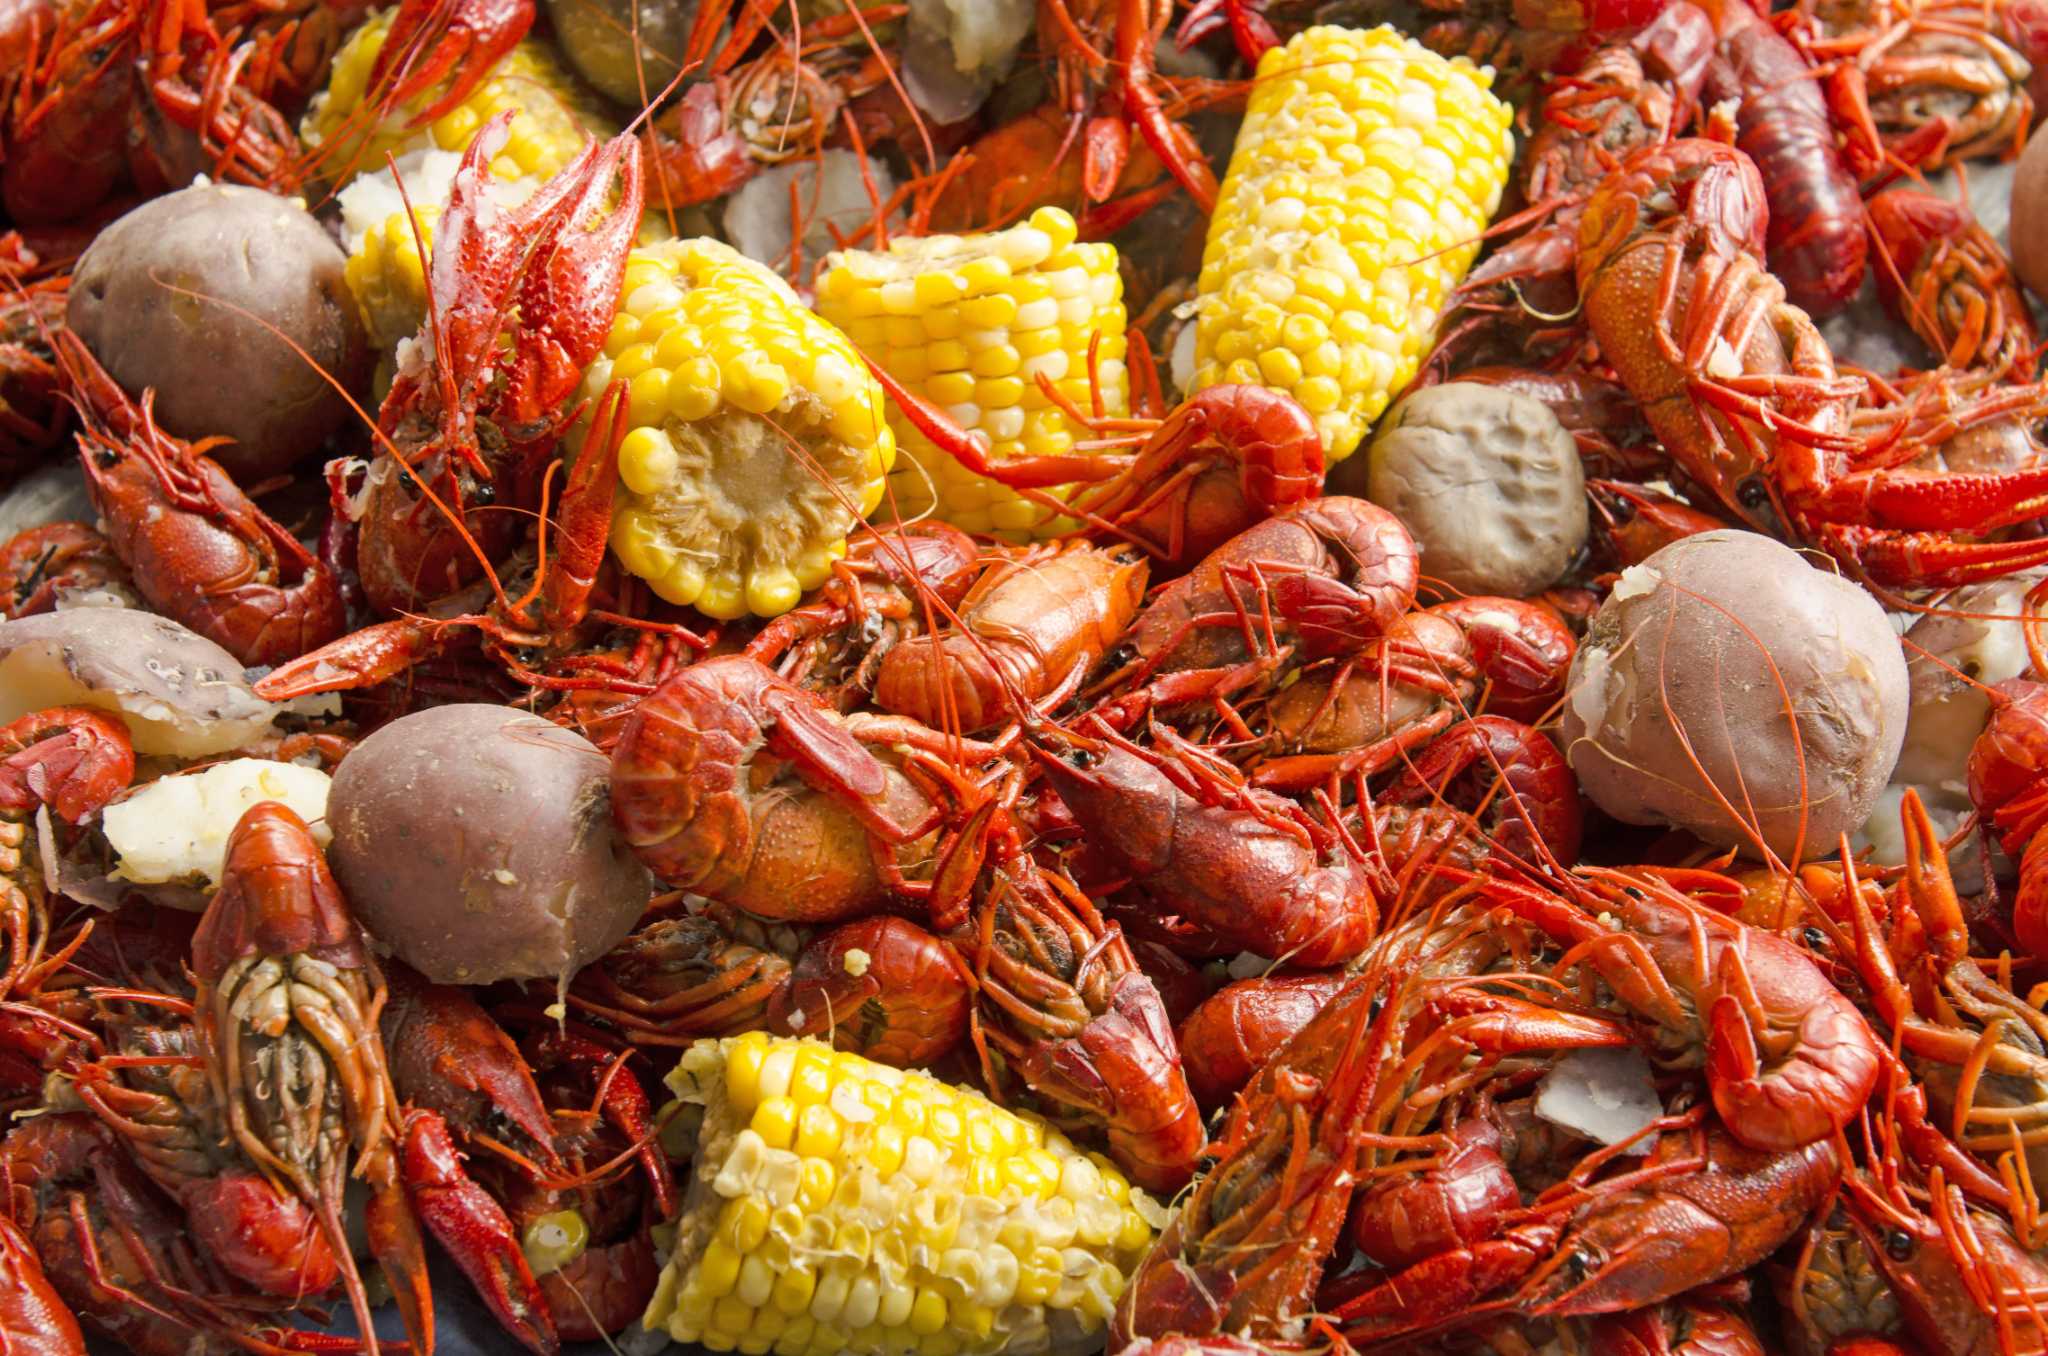 4 classic Louisiana crawfish dishes for live crawfish season, Lent